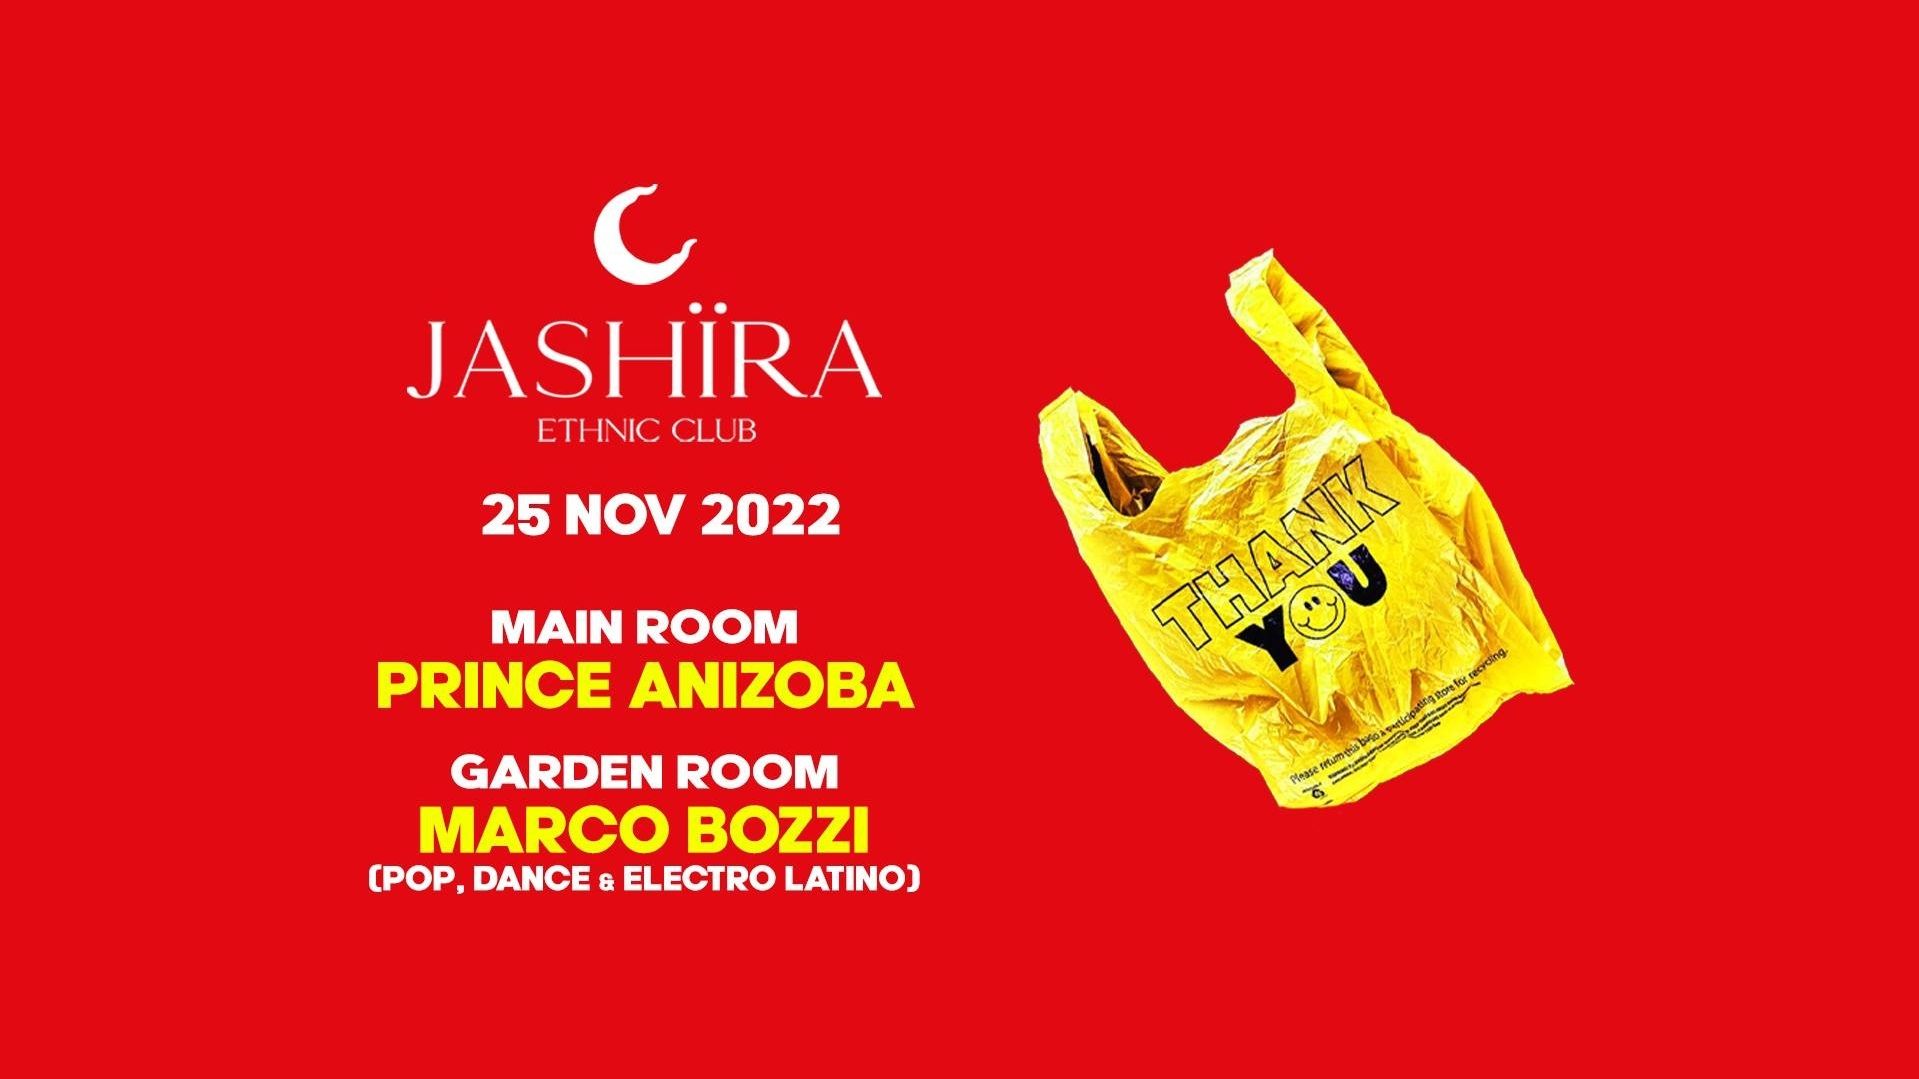 Music Selection By Prince Anizoba & Marco Bozzi